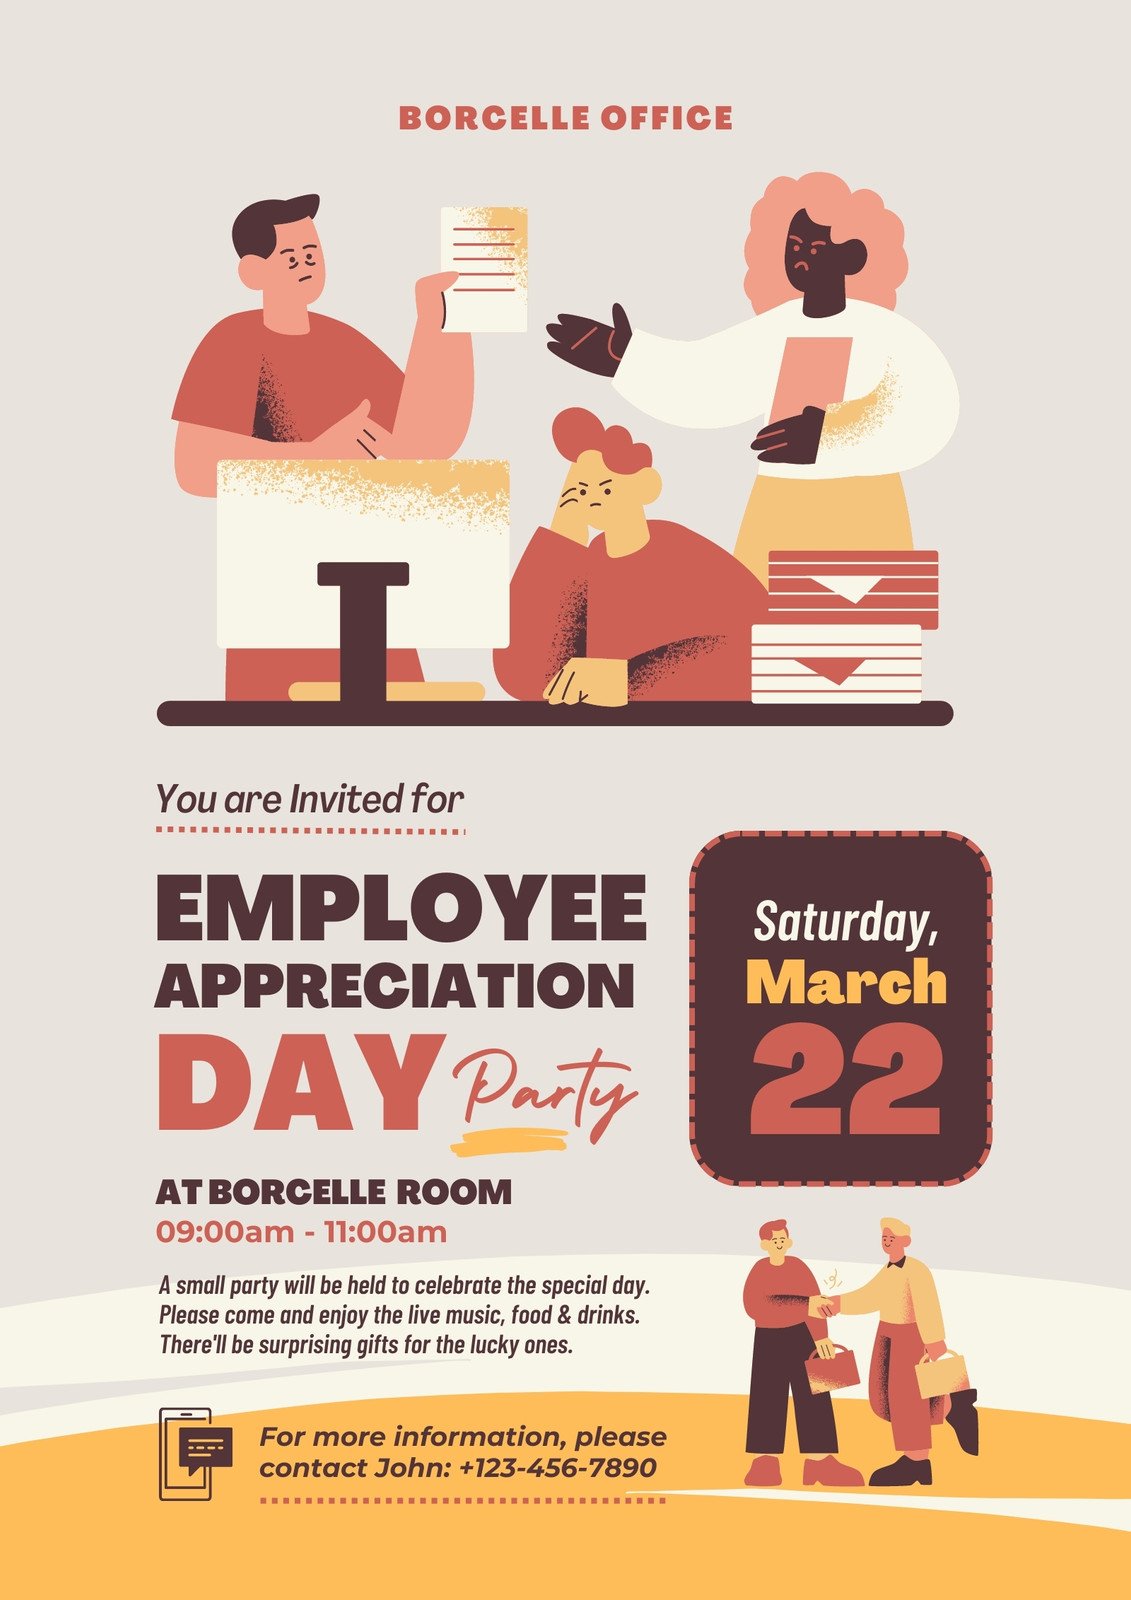 Employee Appreciation Day Wishes Background in Illustrator, JPG